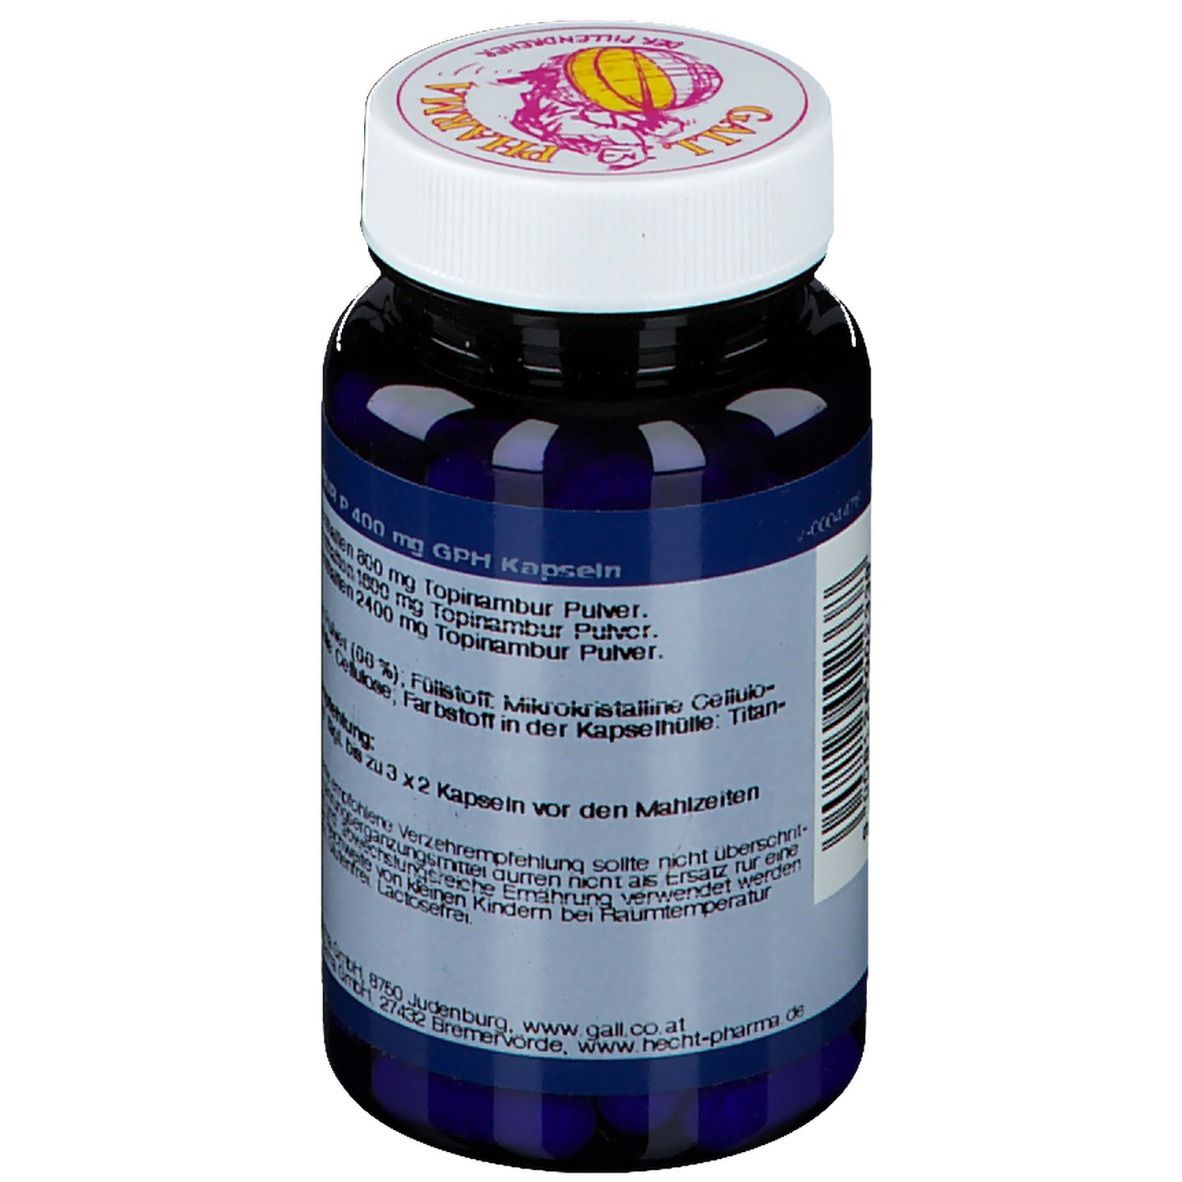 GALL PHARMA Topinambur P 400 mg GPH